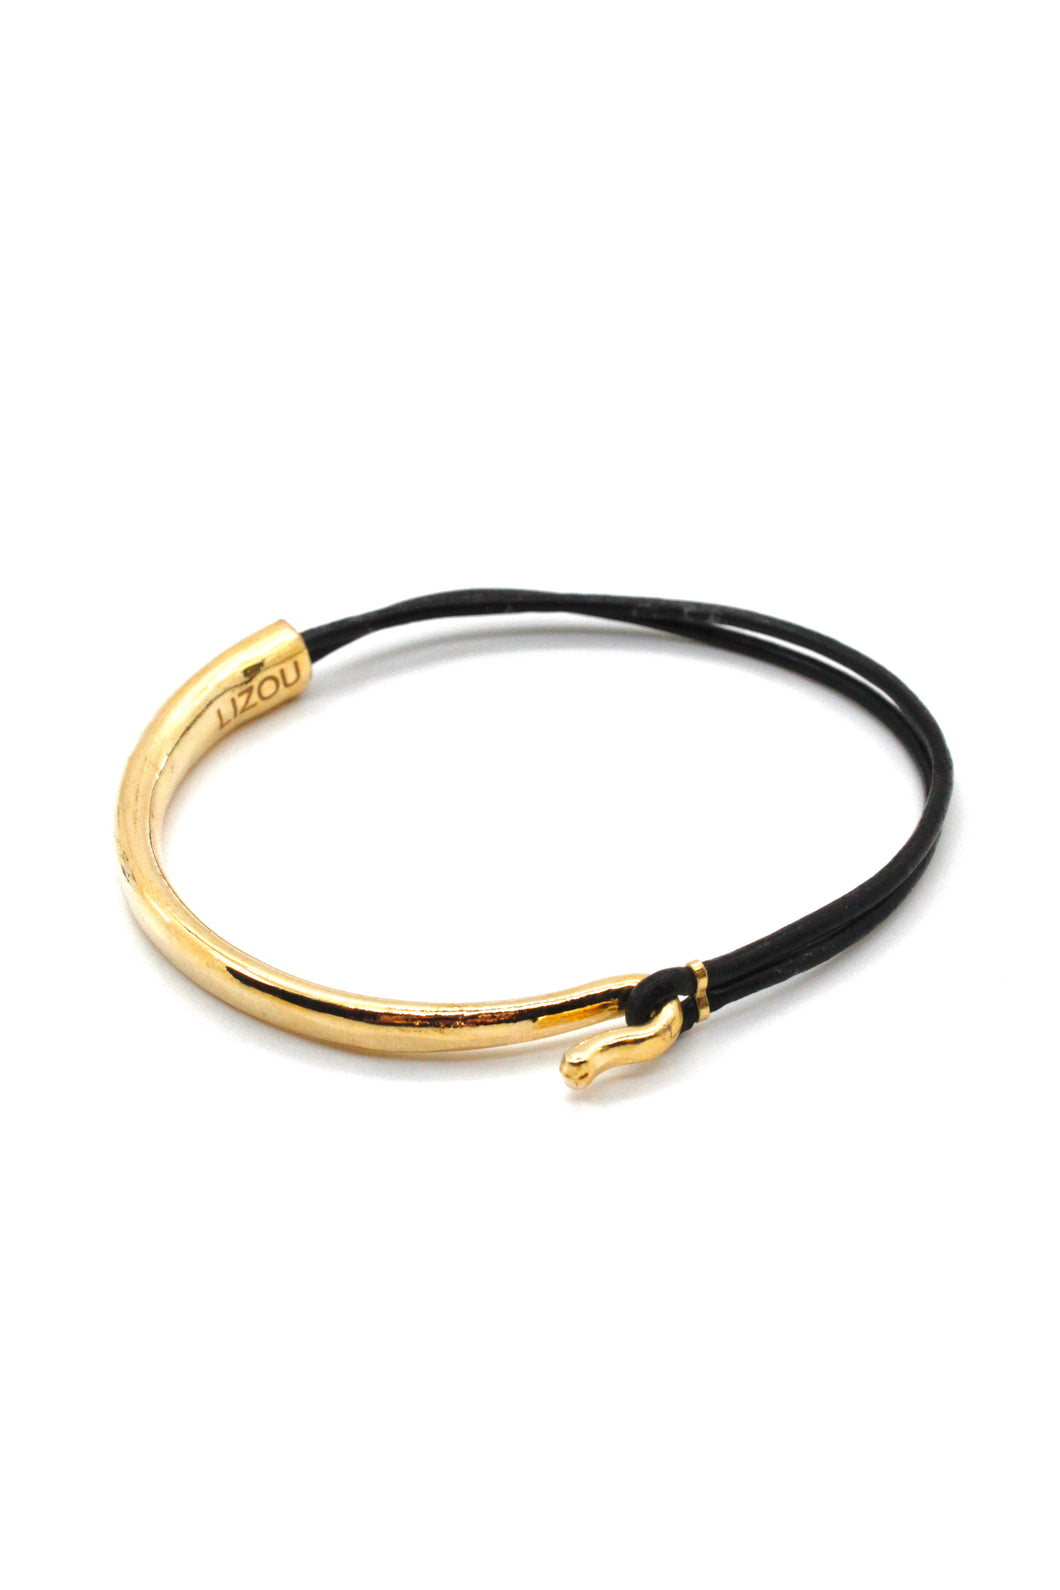 Black Leather + 24K Gold Plate Bangle Bracelet